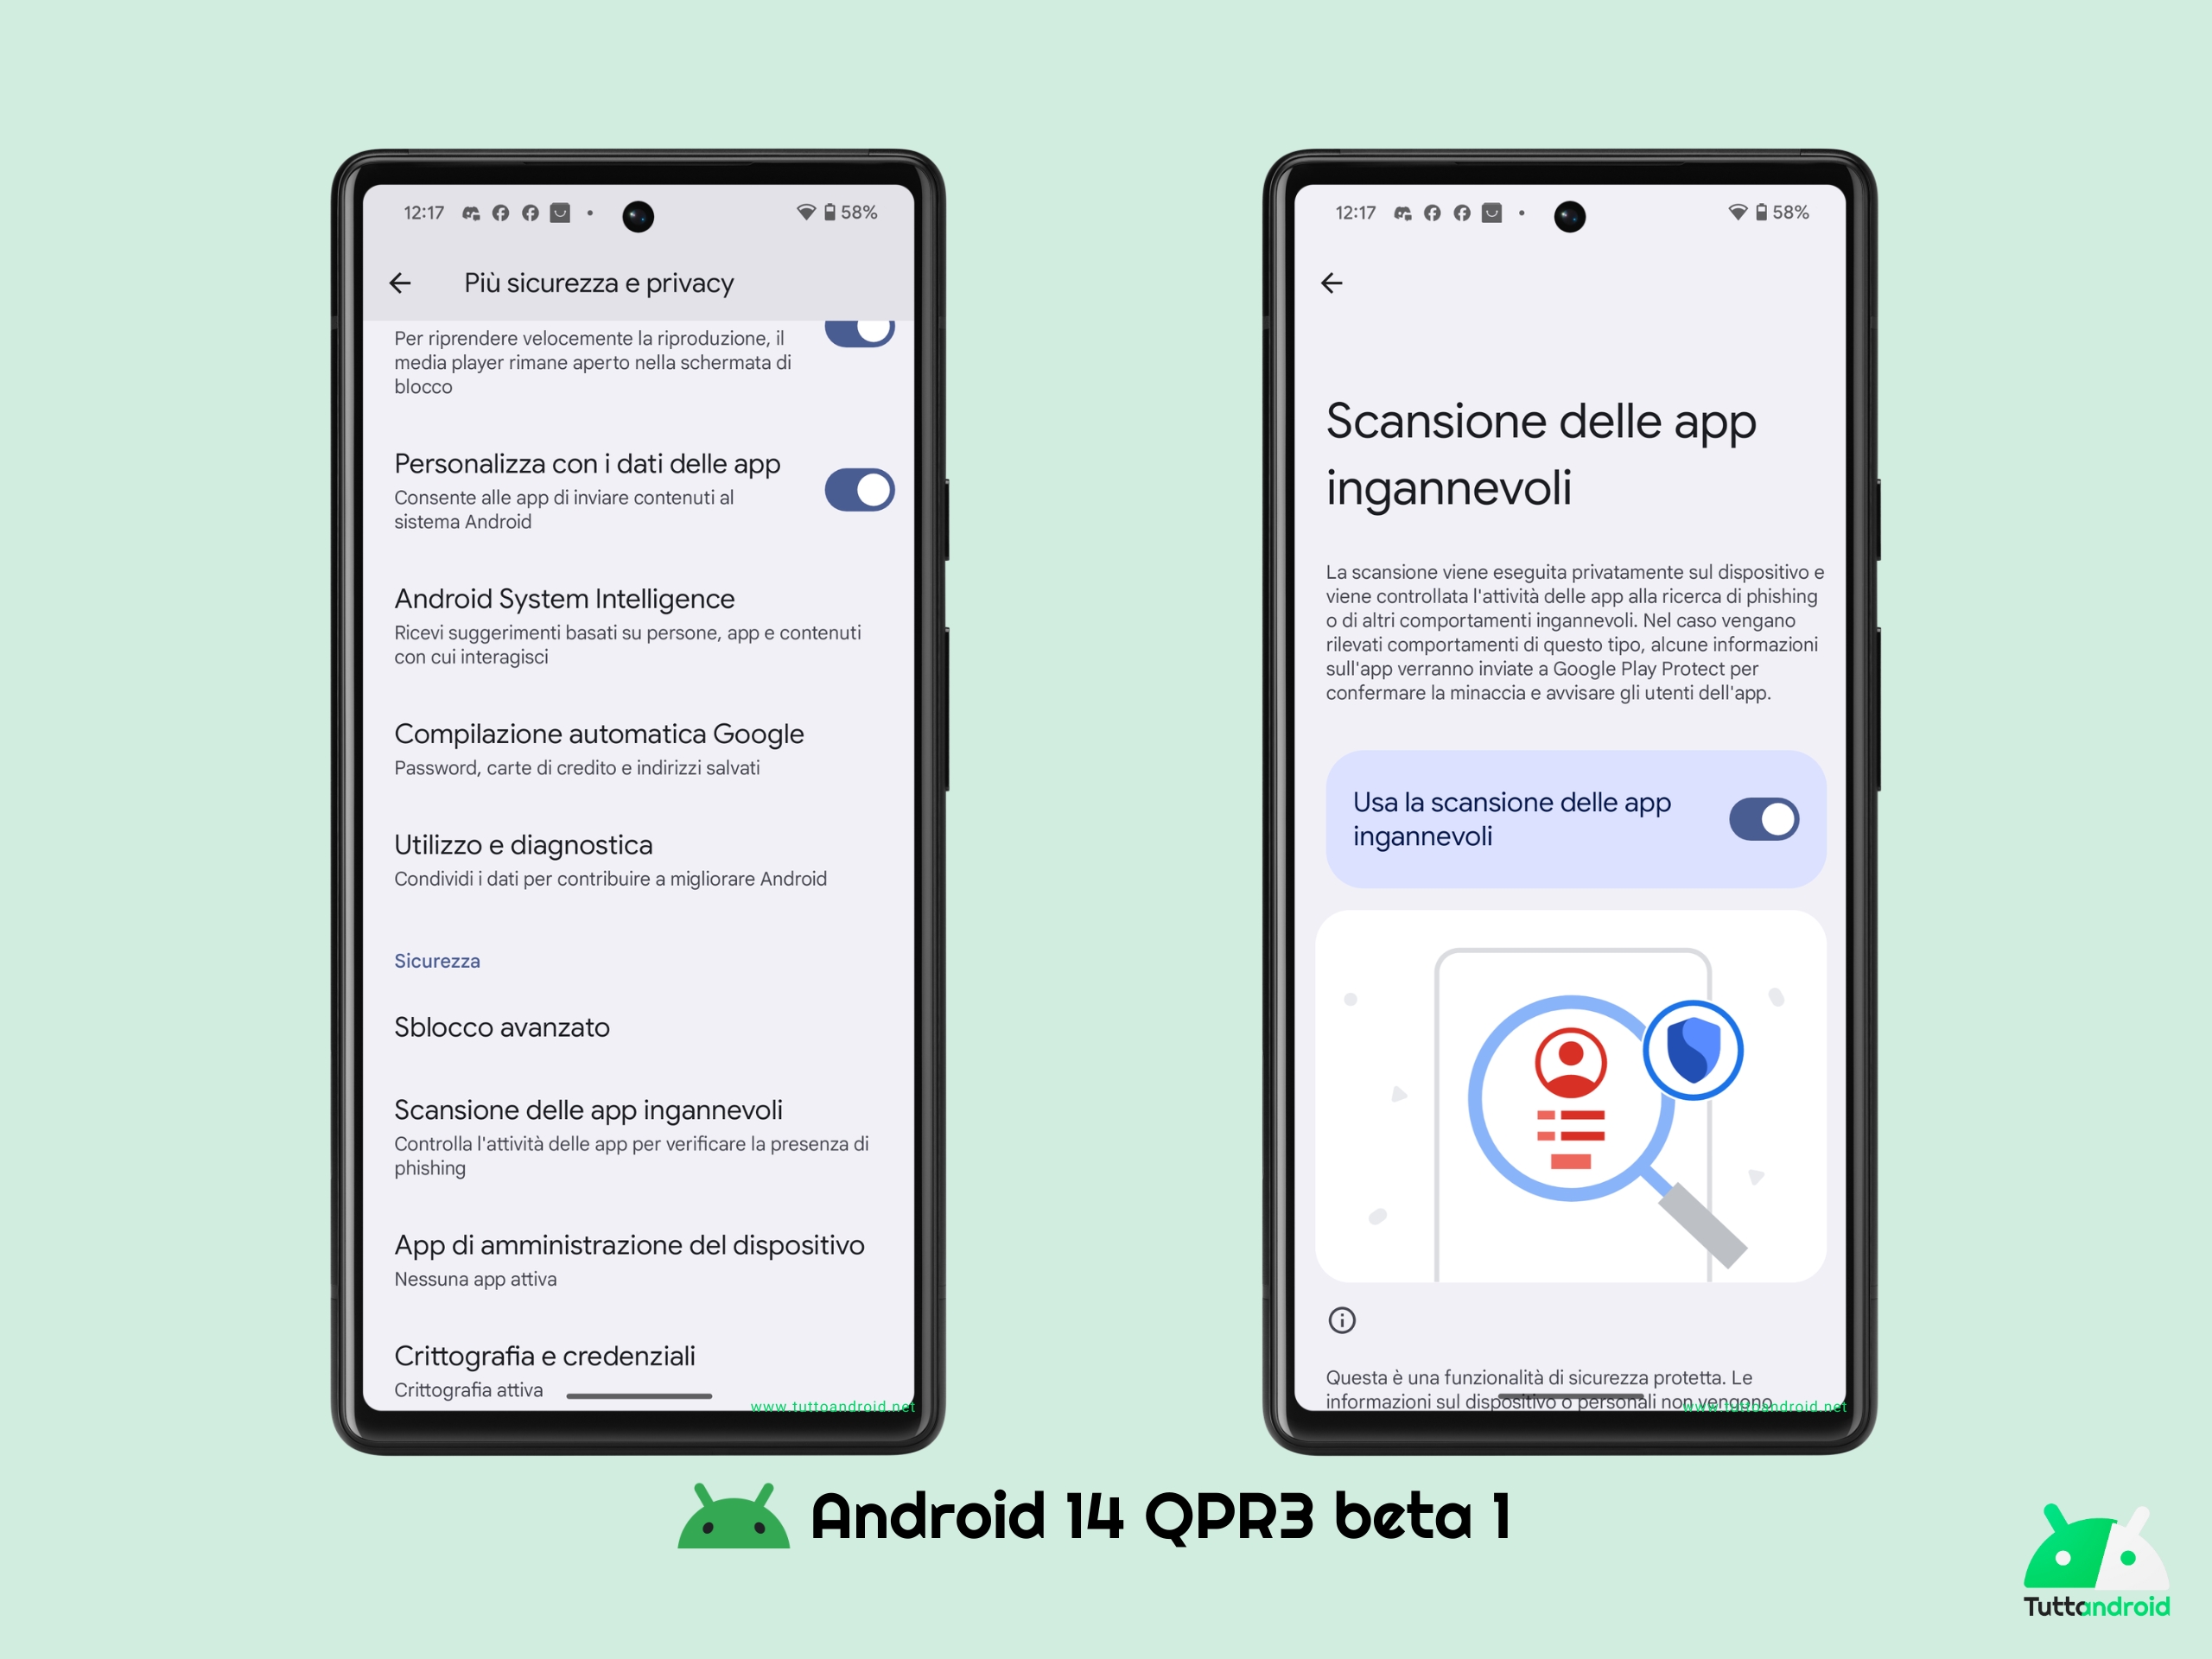 Android 14 QPR3 beta 1 - Scansione app ingannevoli